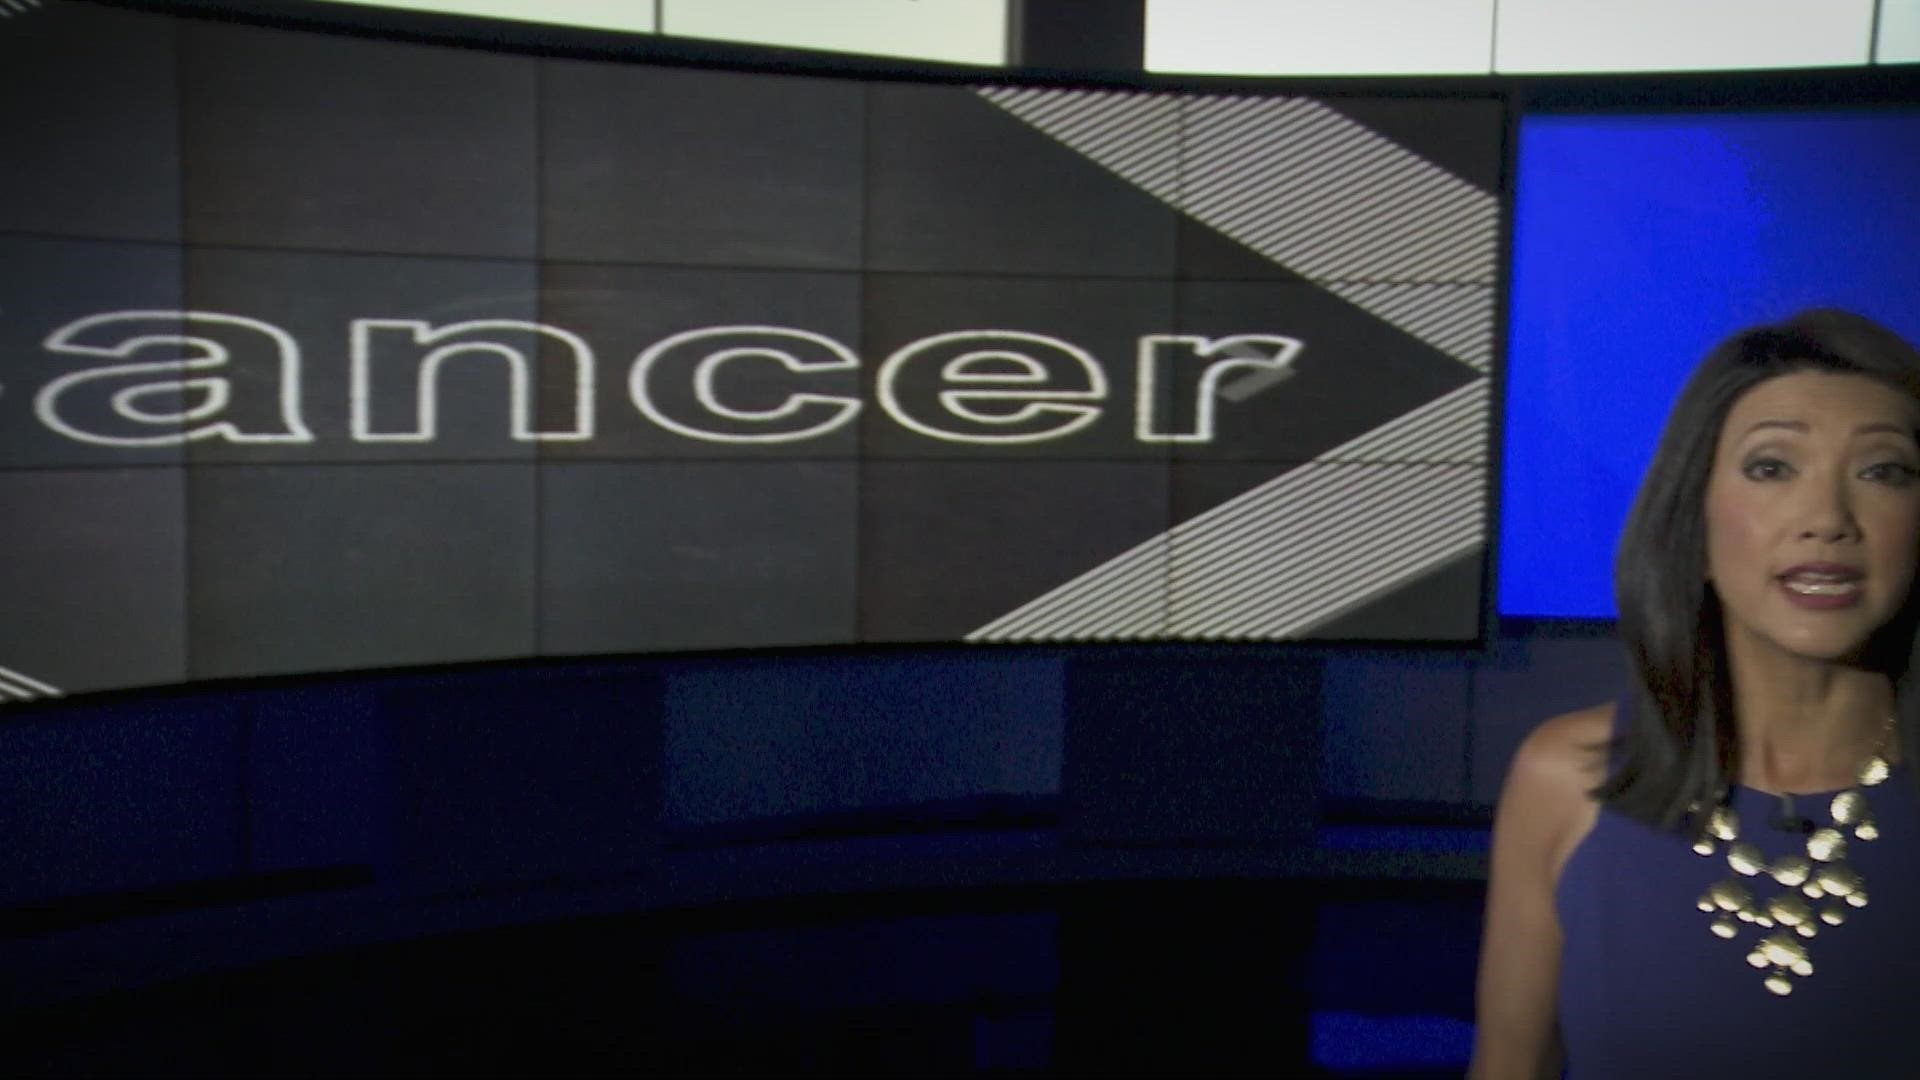 WFMY News 2's Julie Luck returns to work after colon cancer battle